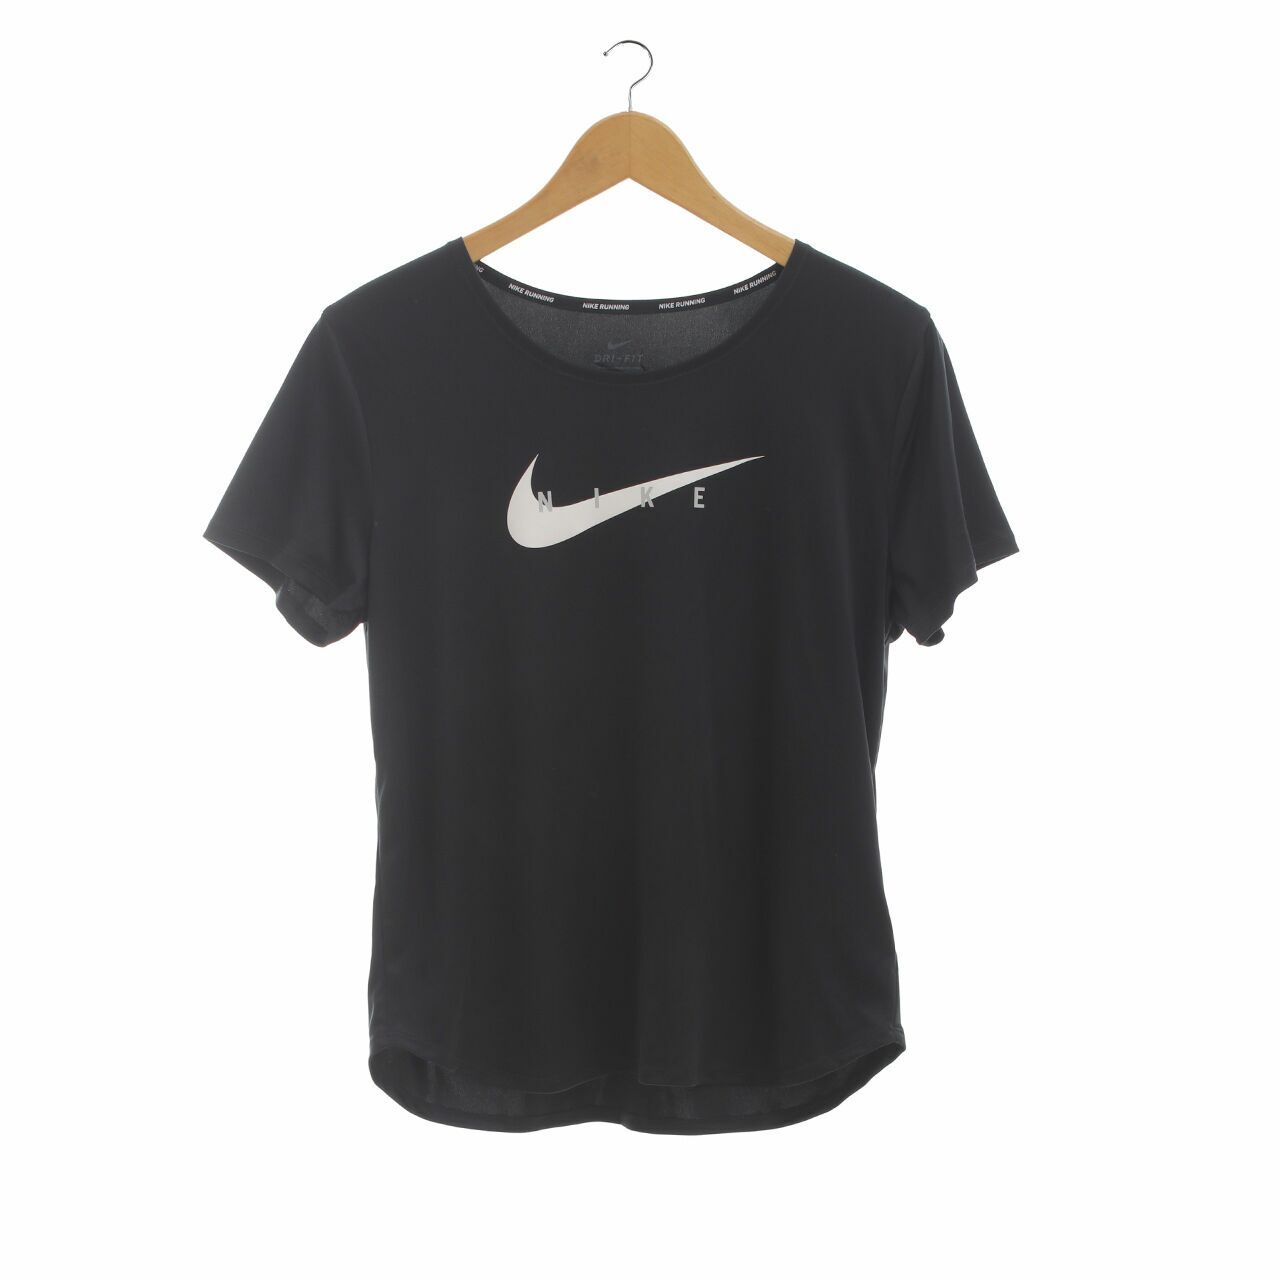 Nike Running Swoosh Top Short Sleeve T-Shirt